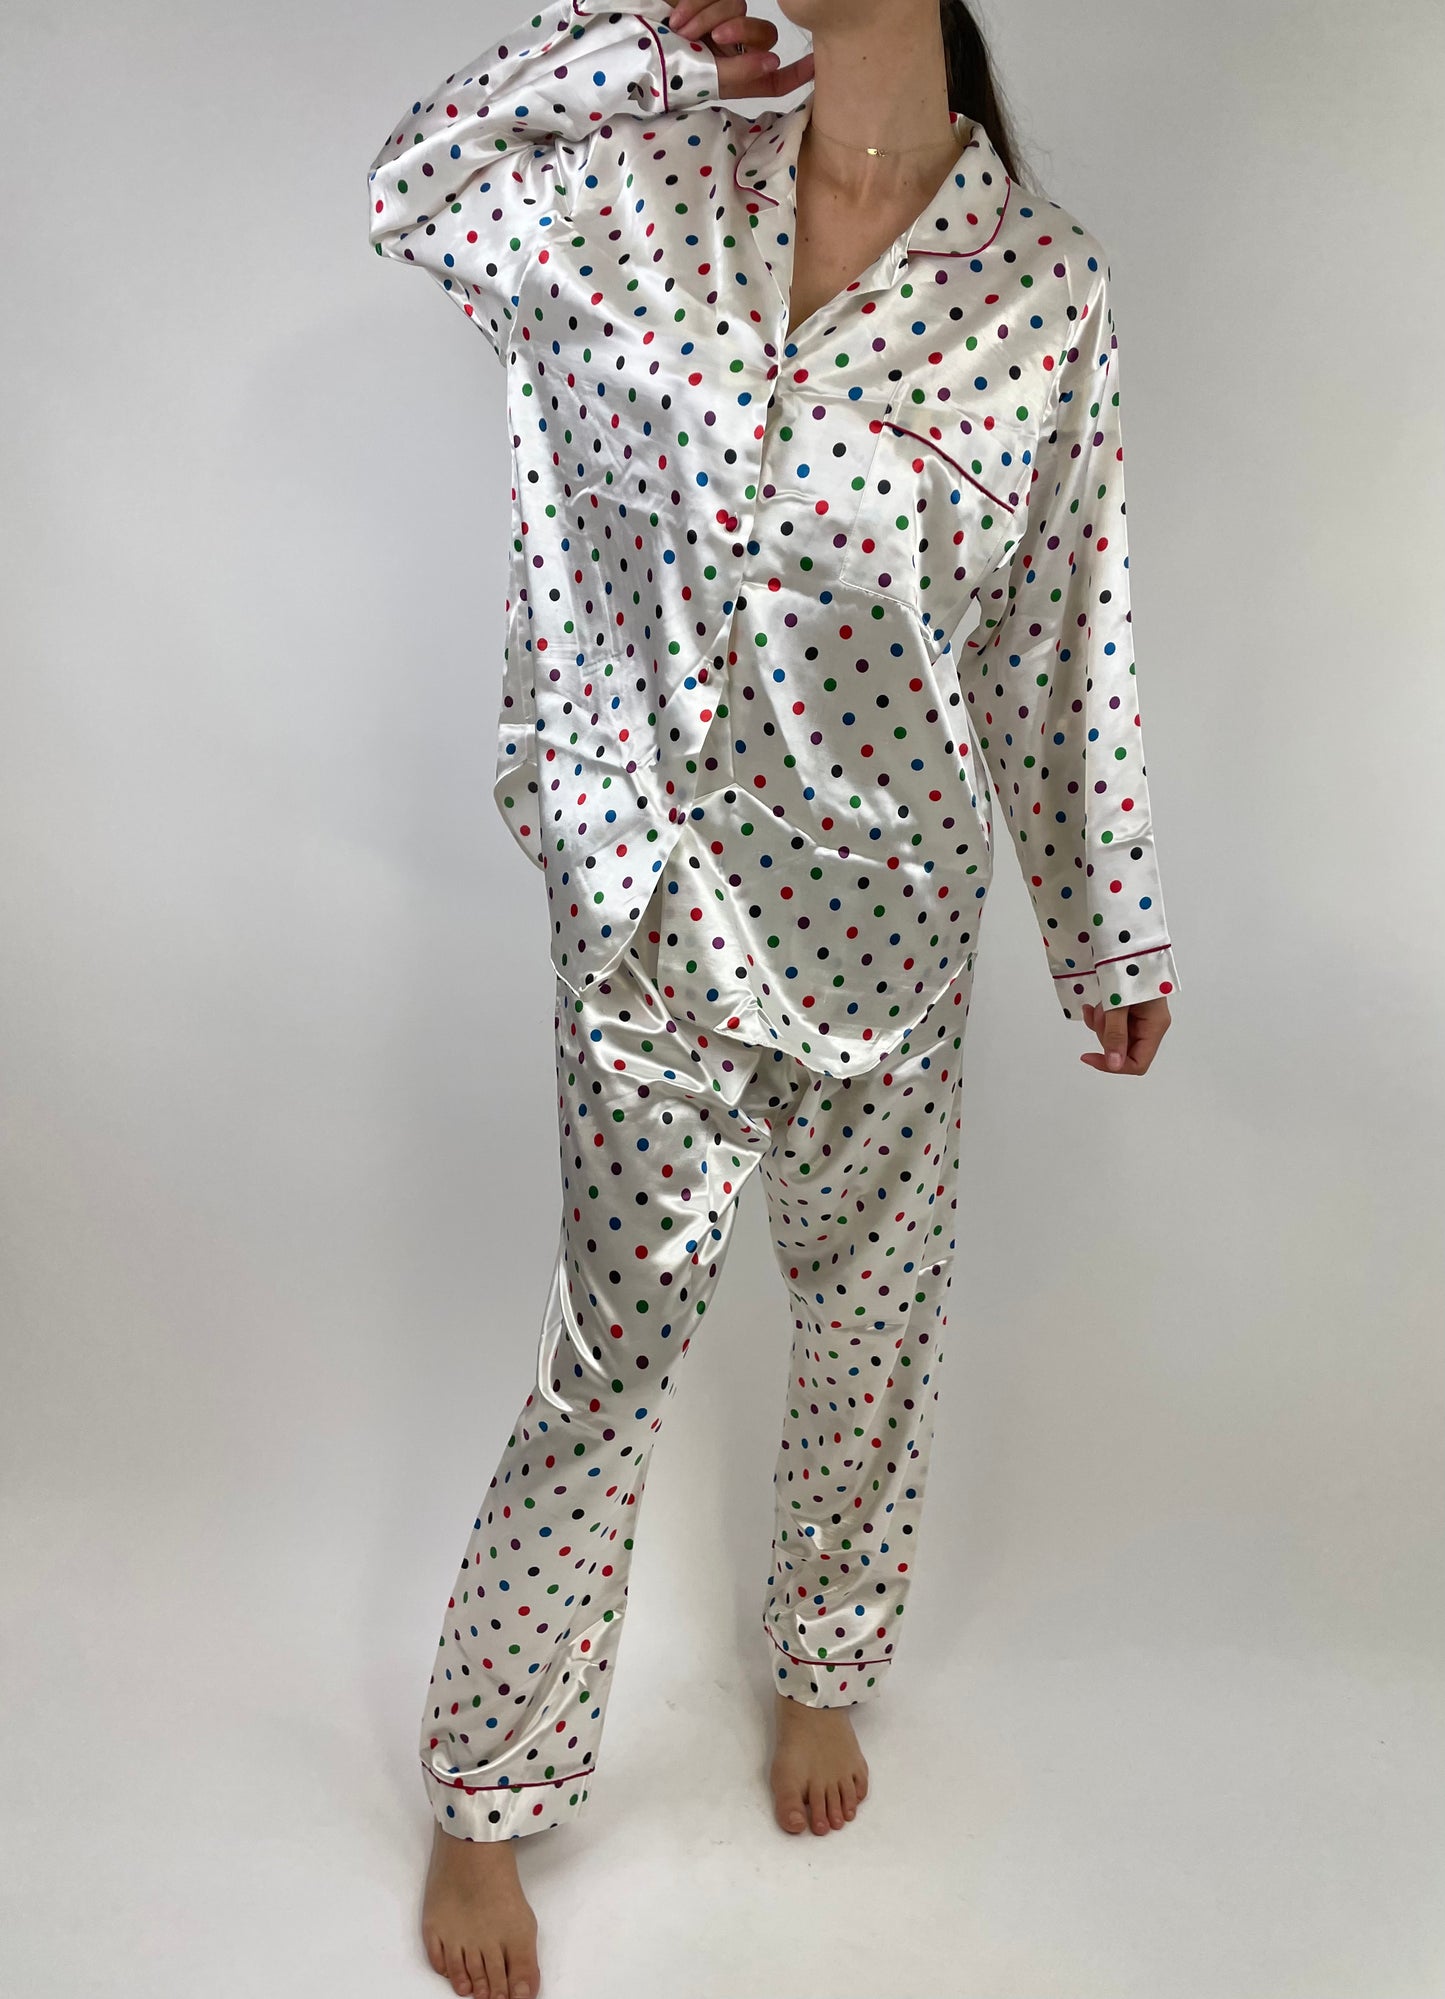 Pajamas FP Michelet 1980s